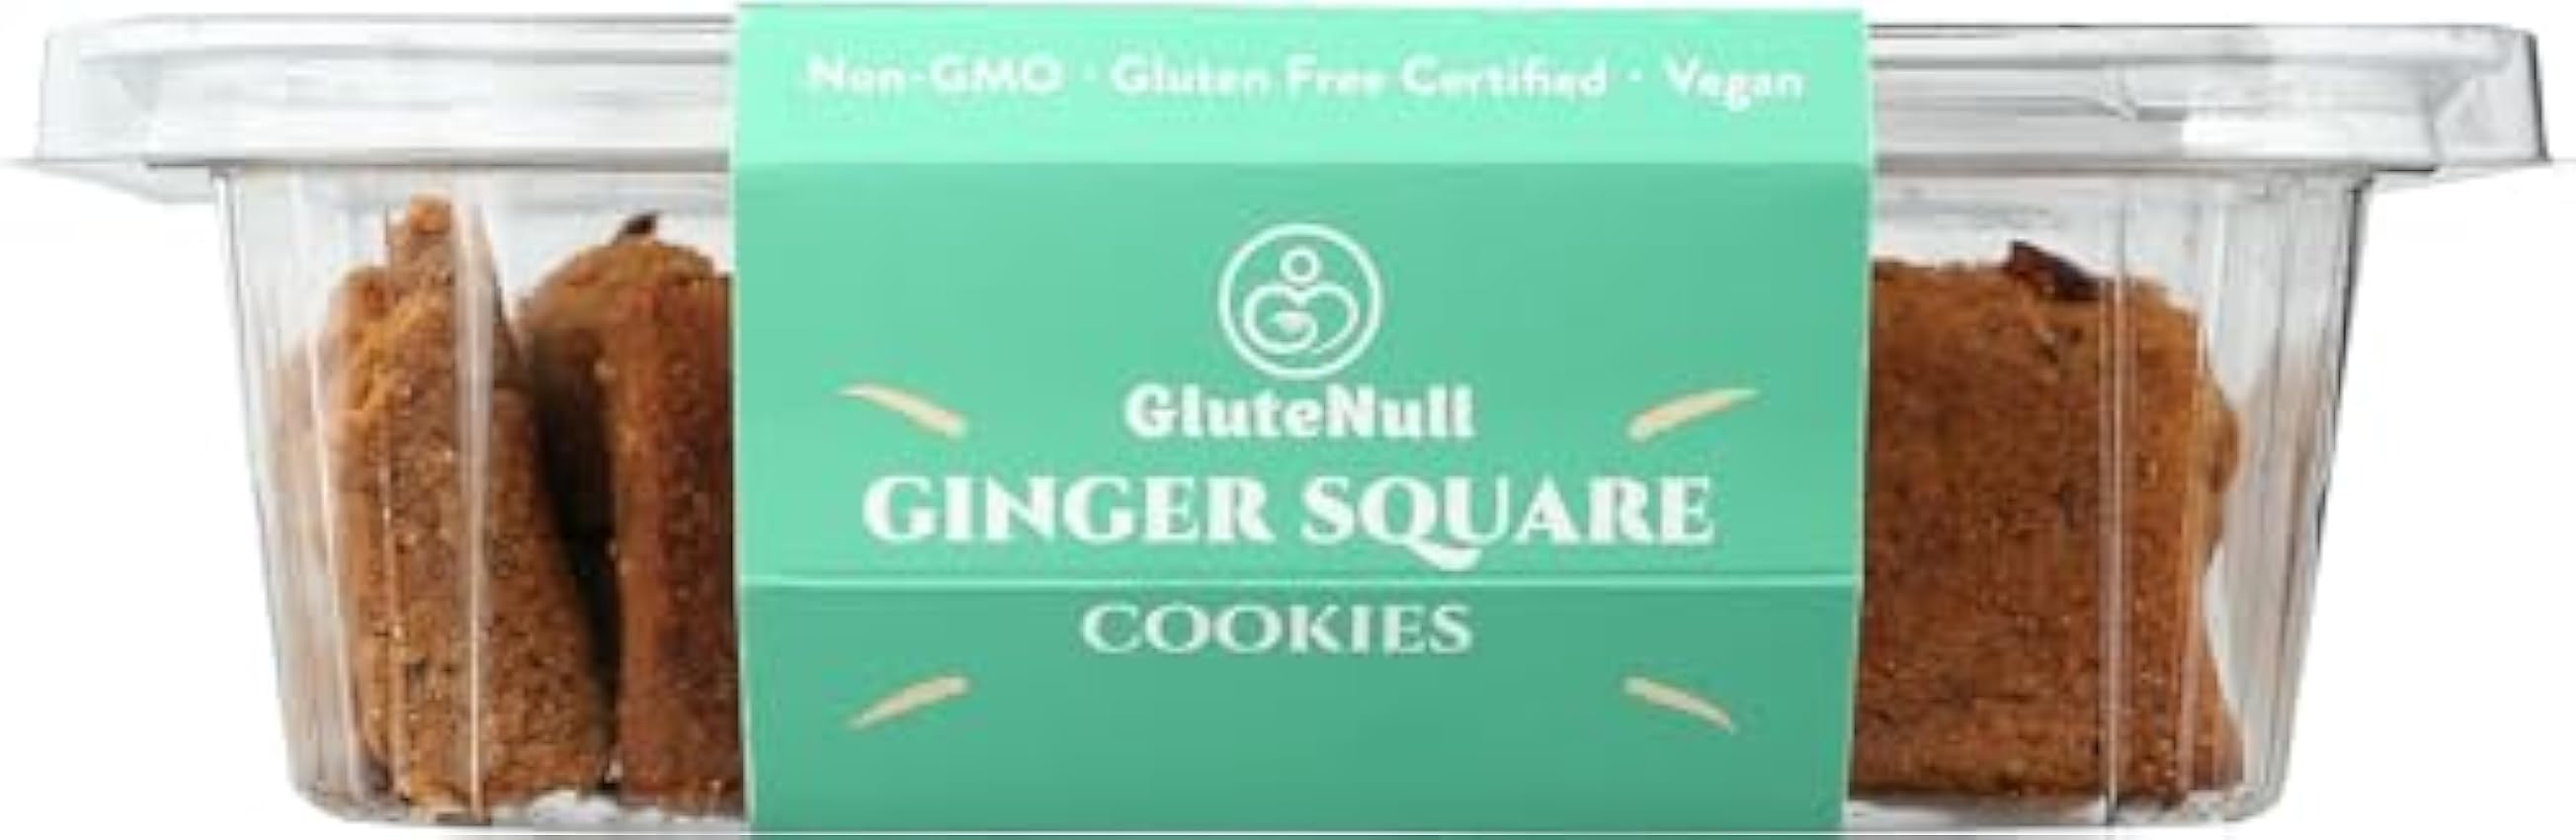 GluteNull Ginger Square Gingerbread 320g JoC8iocJ